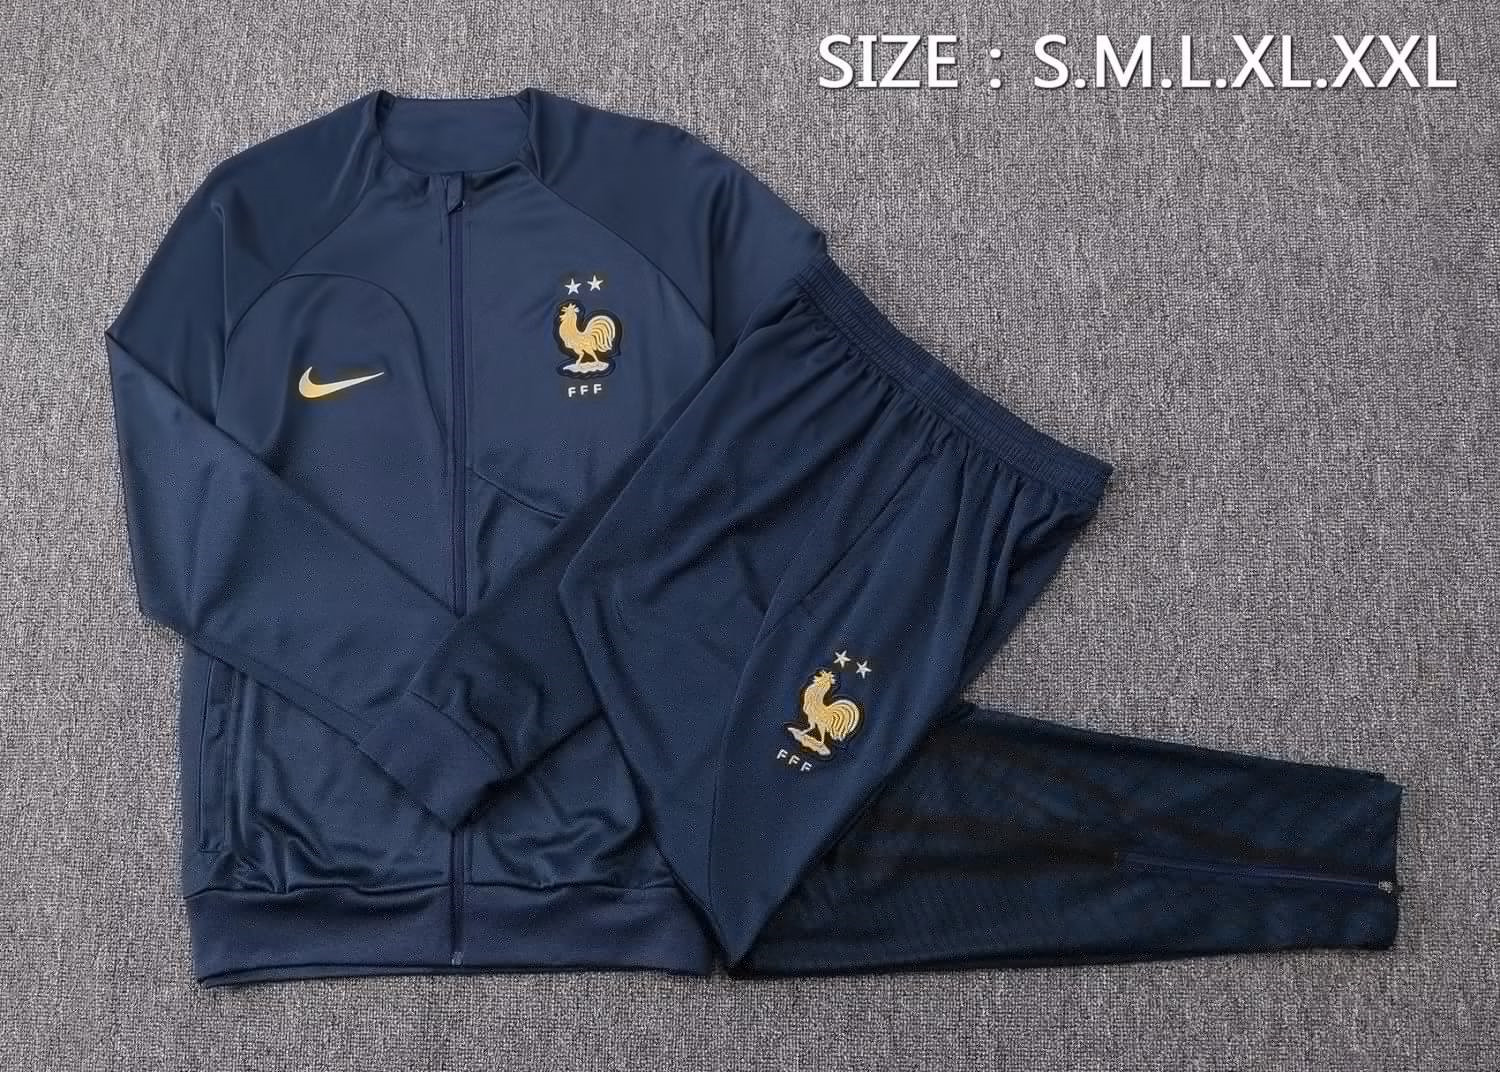 France Soccer Jacket + Pant Replica Royal II 2022 Men's